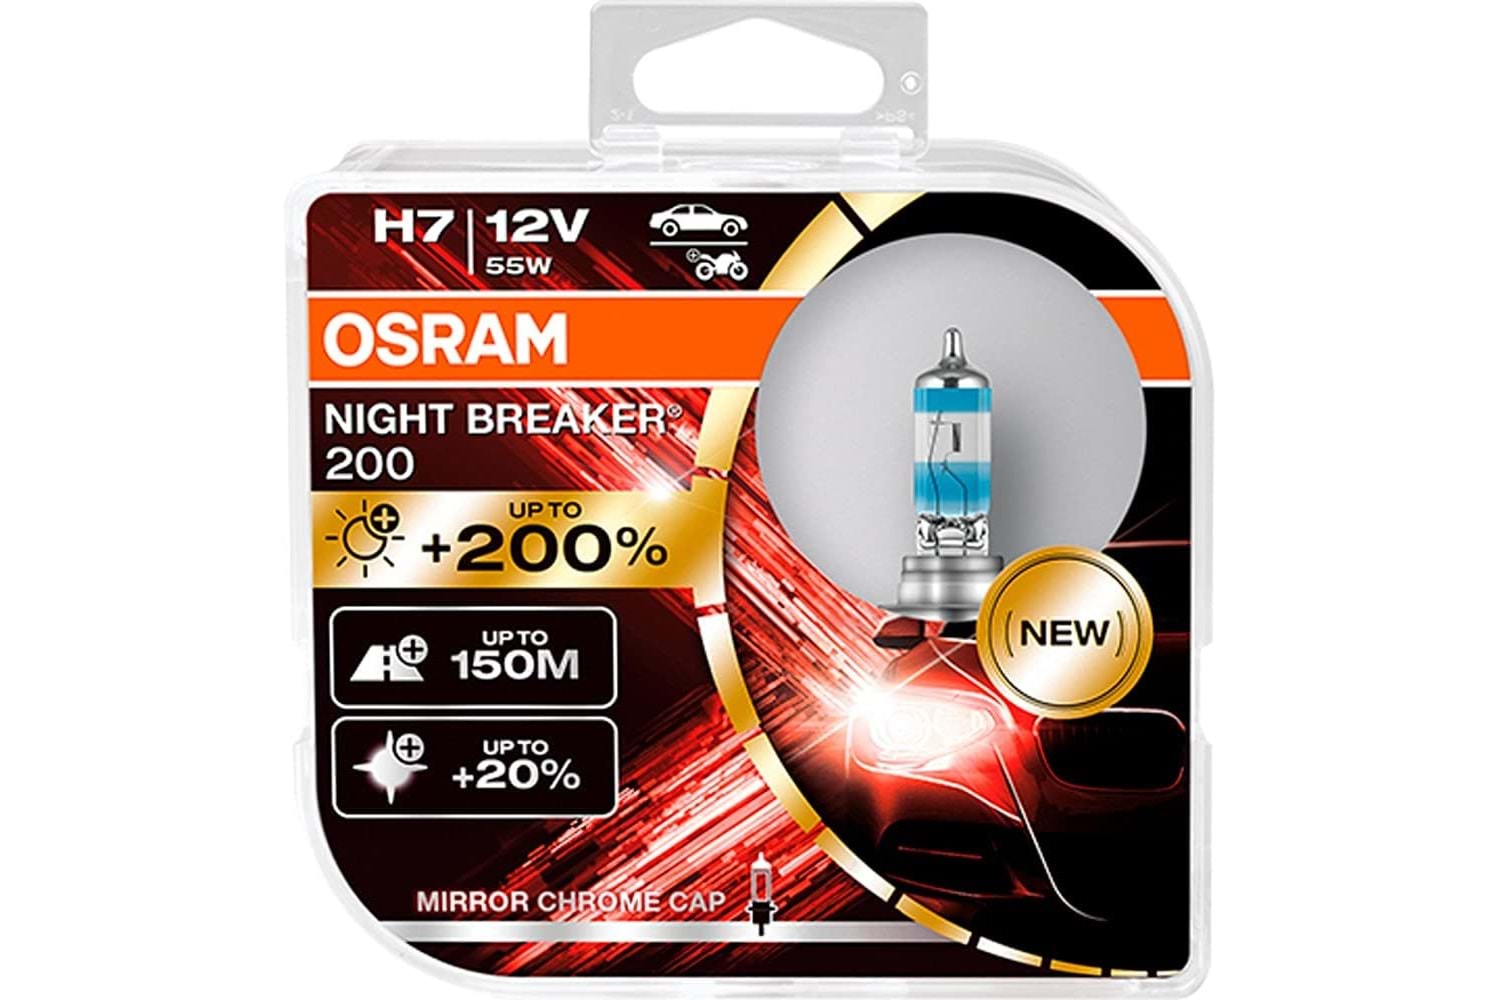 Osram Night Breaker 200 H7 Ampul Seti New 12V-55W